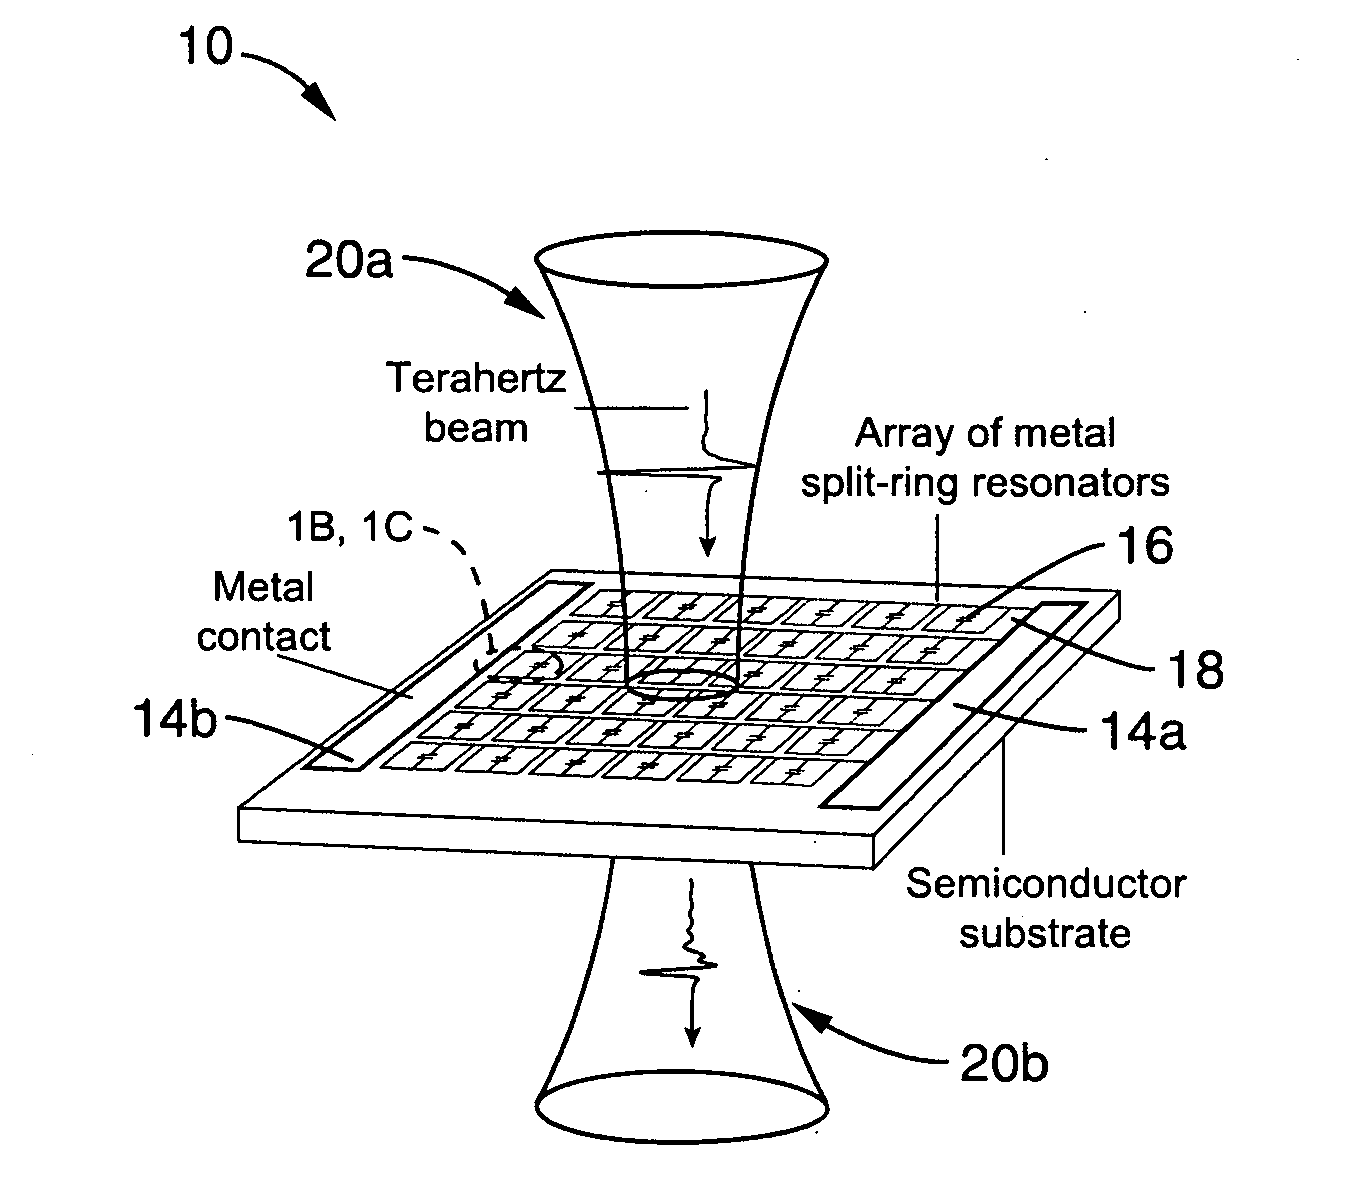 Active terahertz metamaterial devices